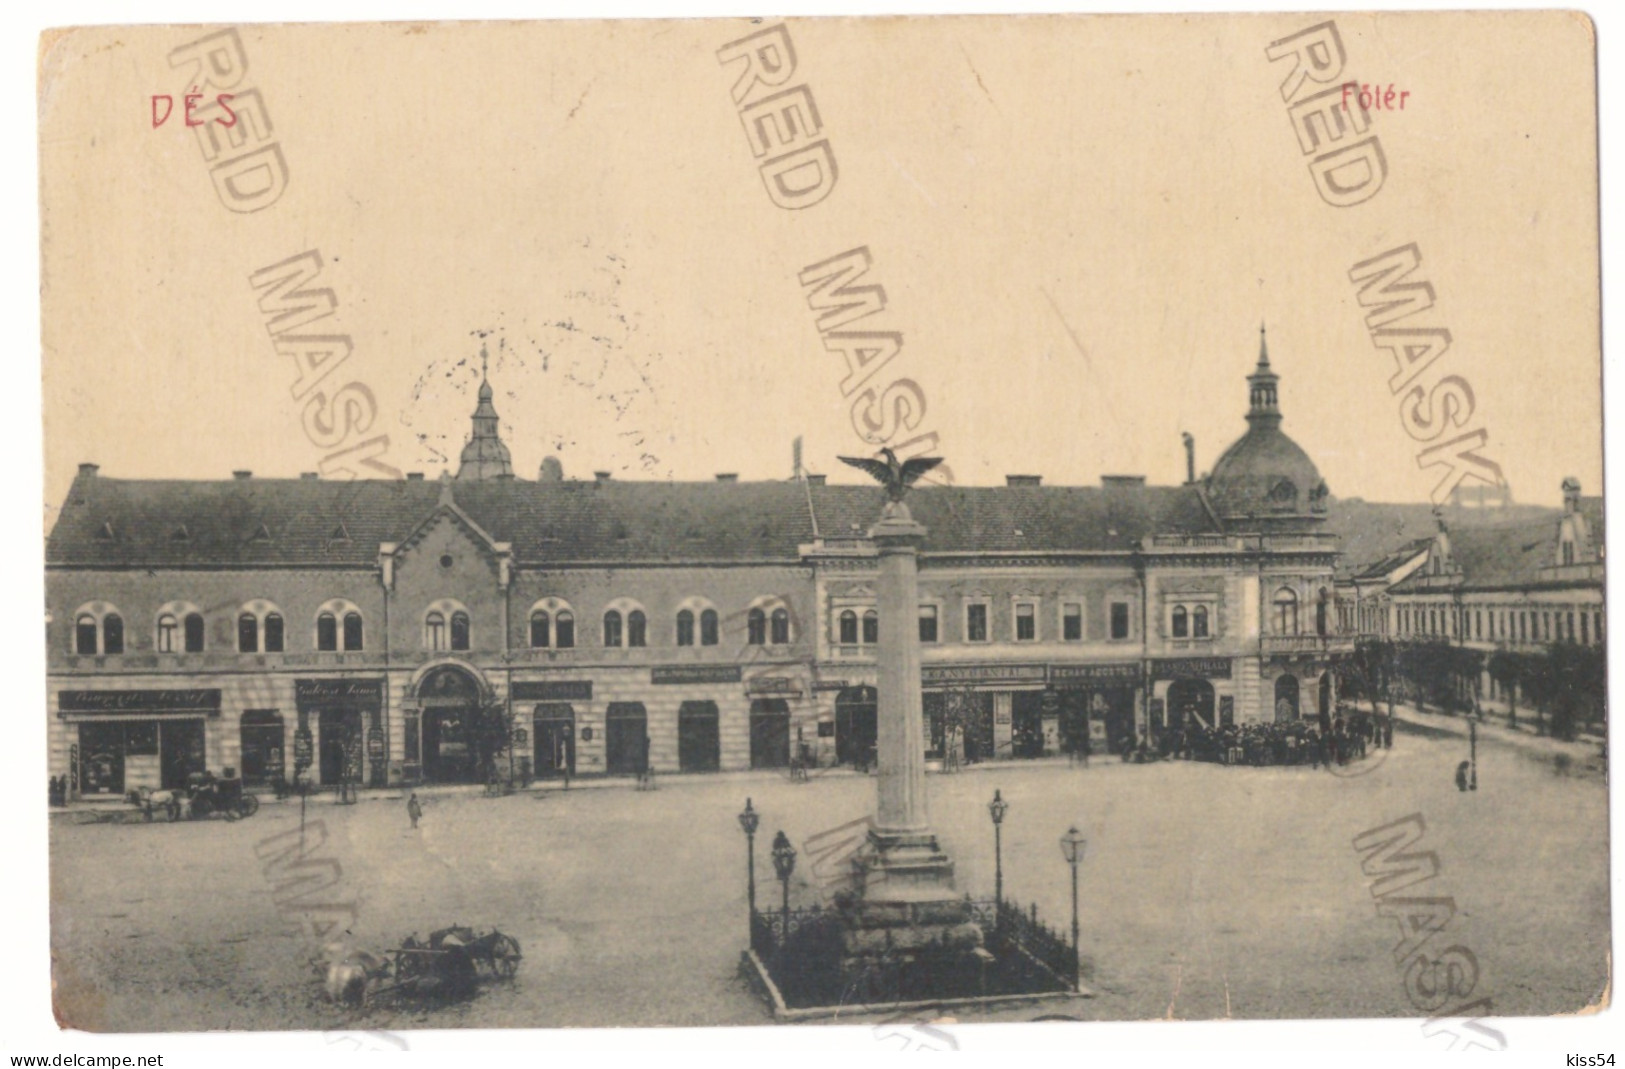 RO 999 - 22253 DEJ, Cluj, Market, Romania - Old Postcard - Used - 1908 - Rumänien